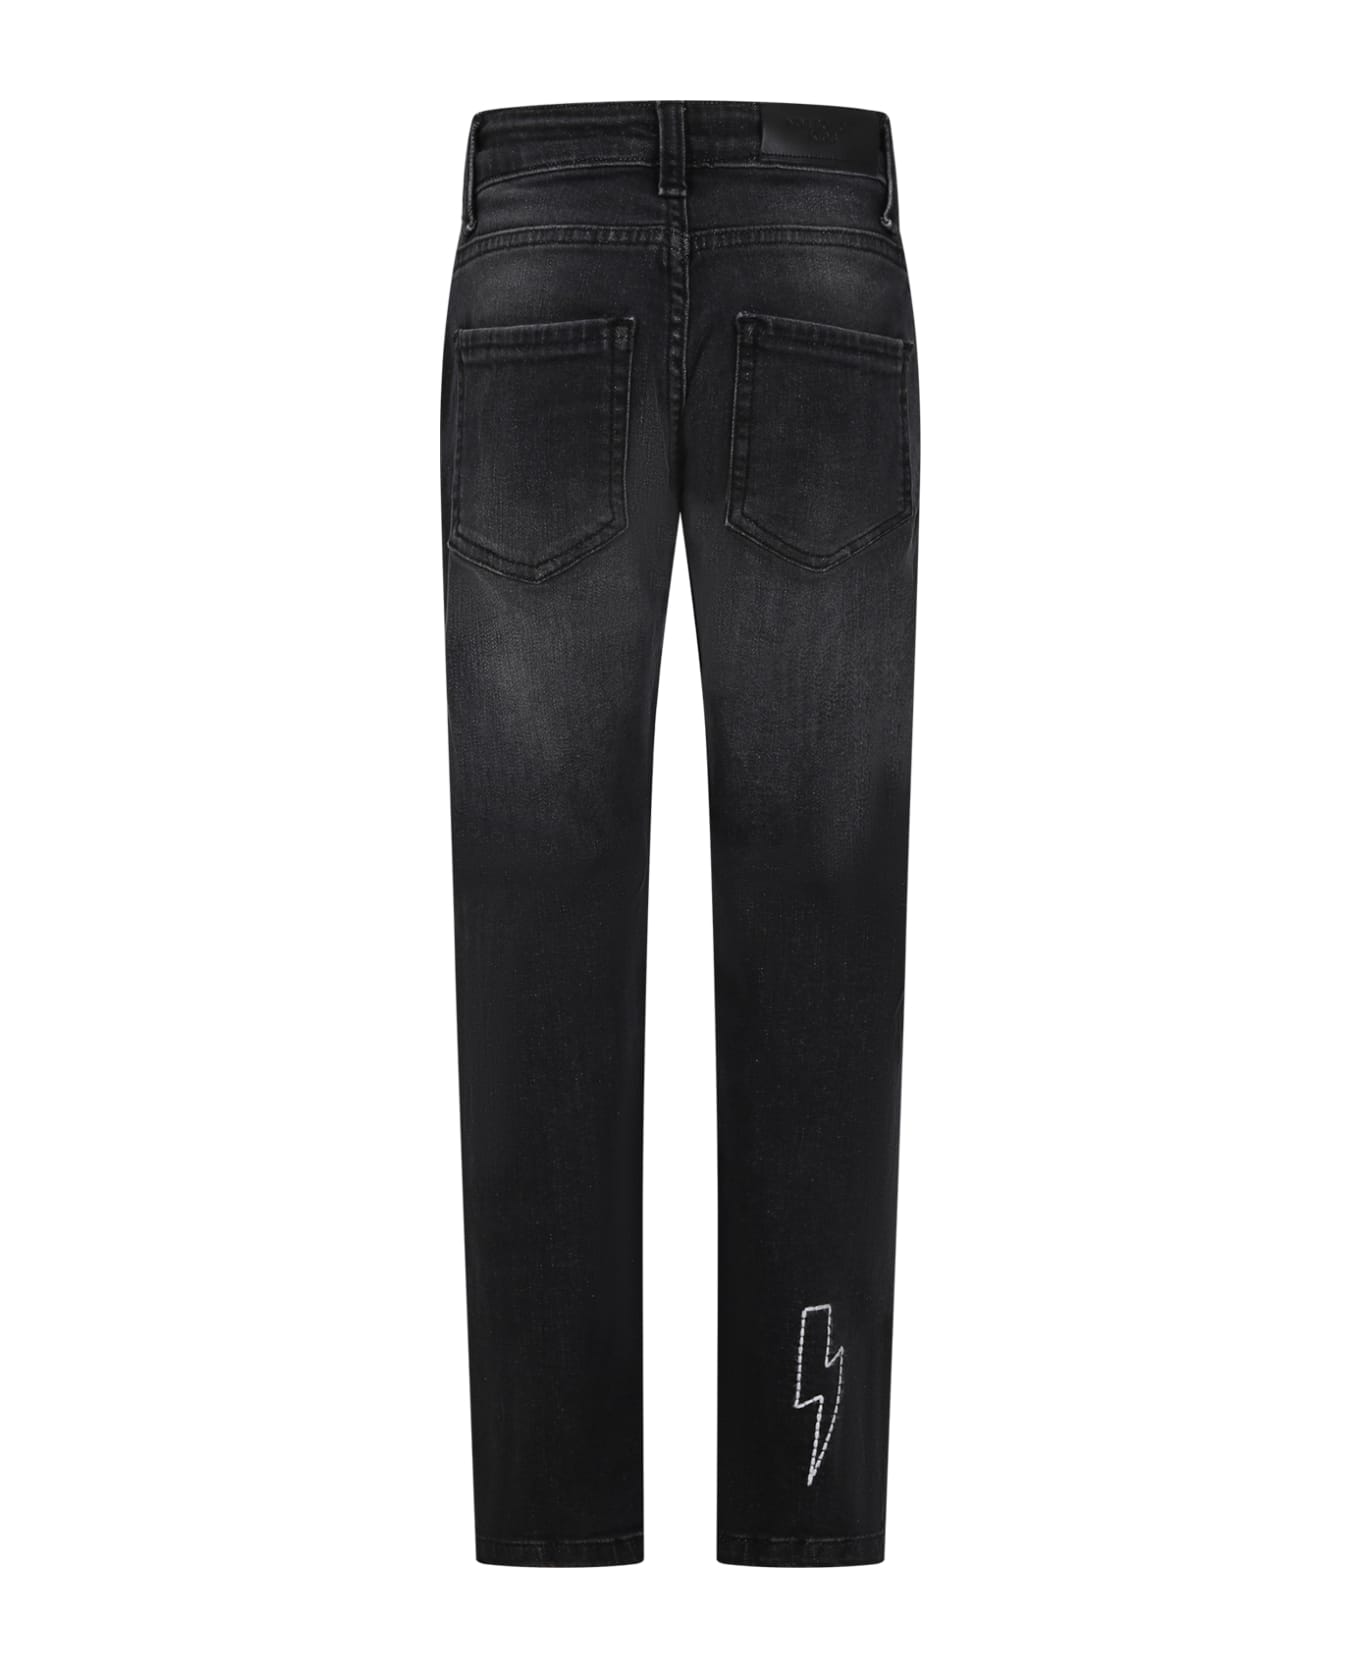 Neil Barrett Black Jeans For Boy With Logo - Denim